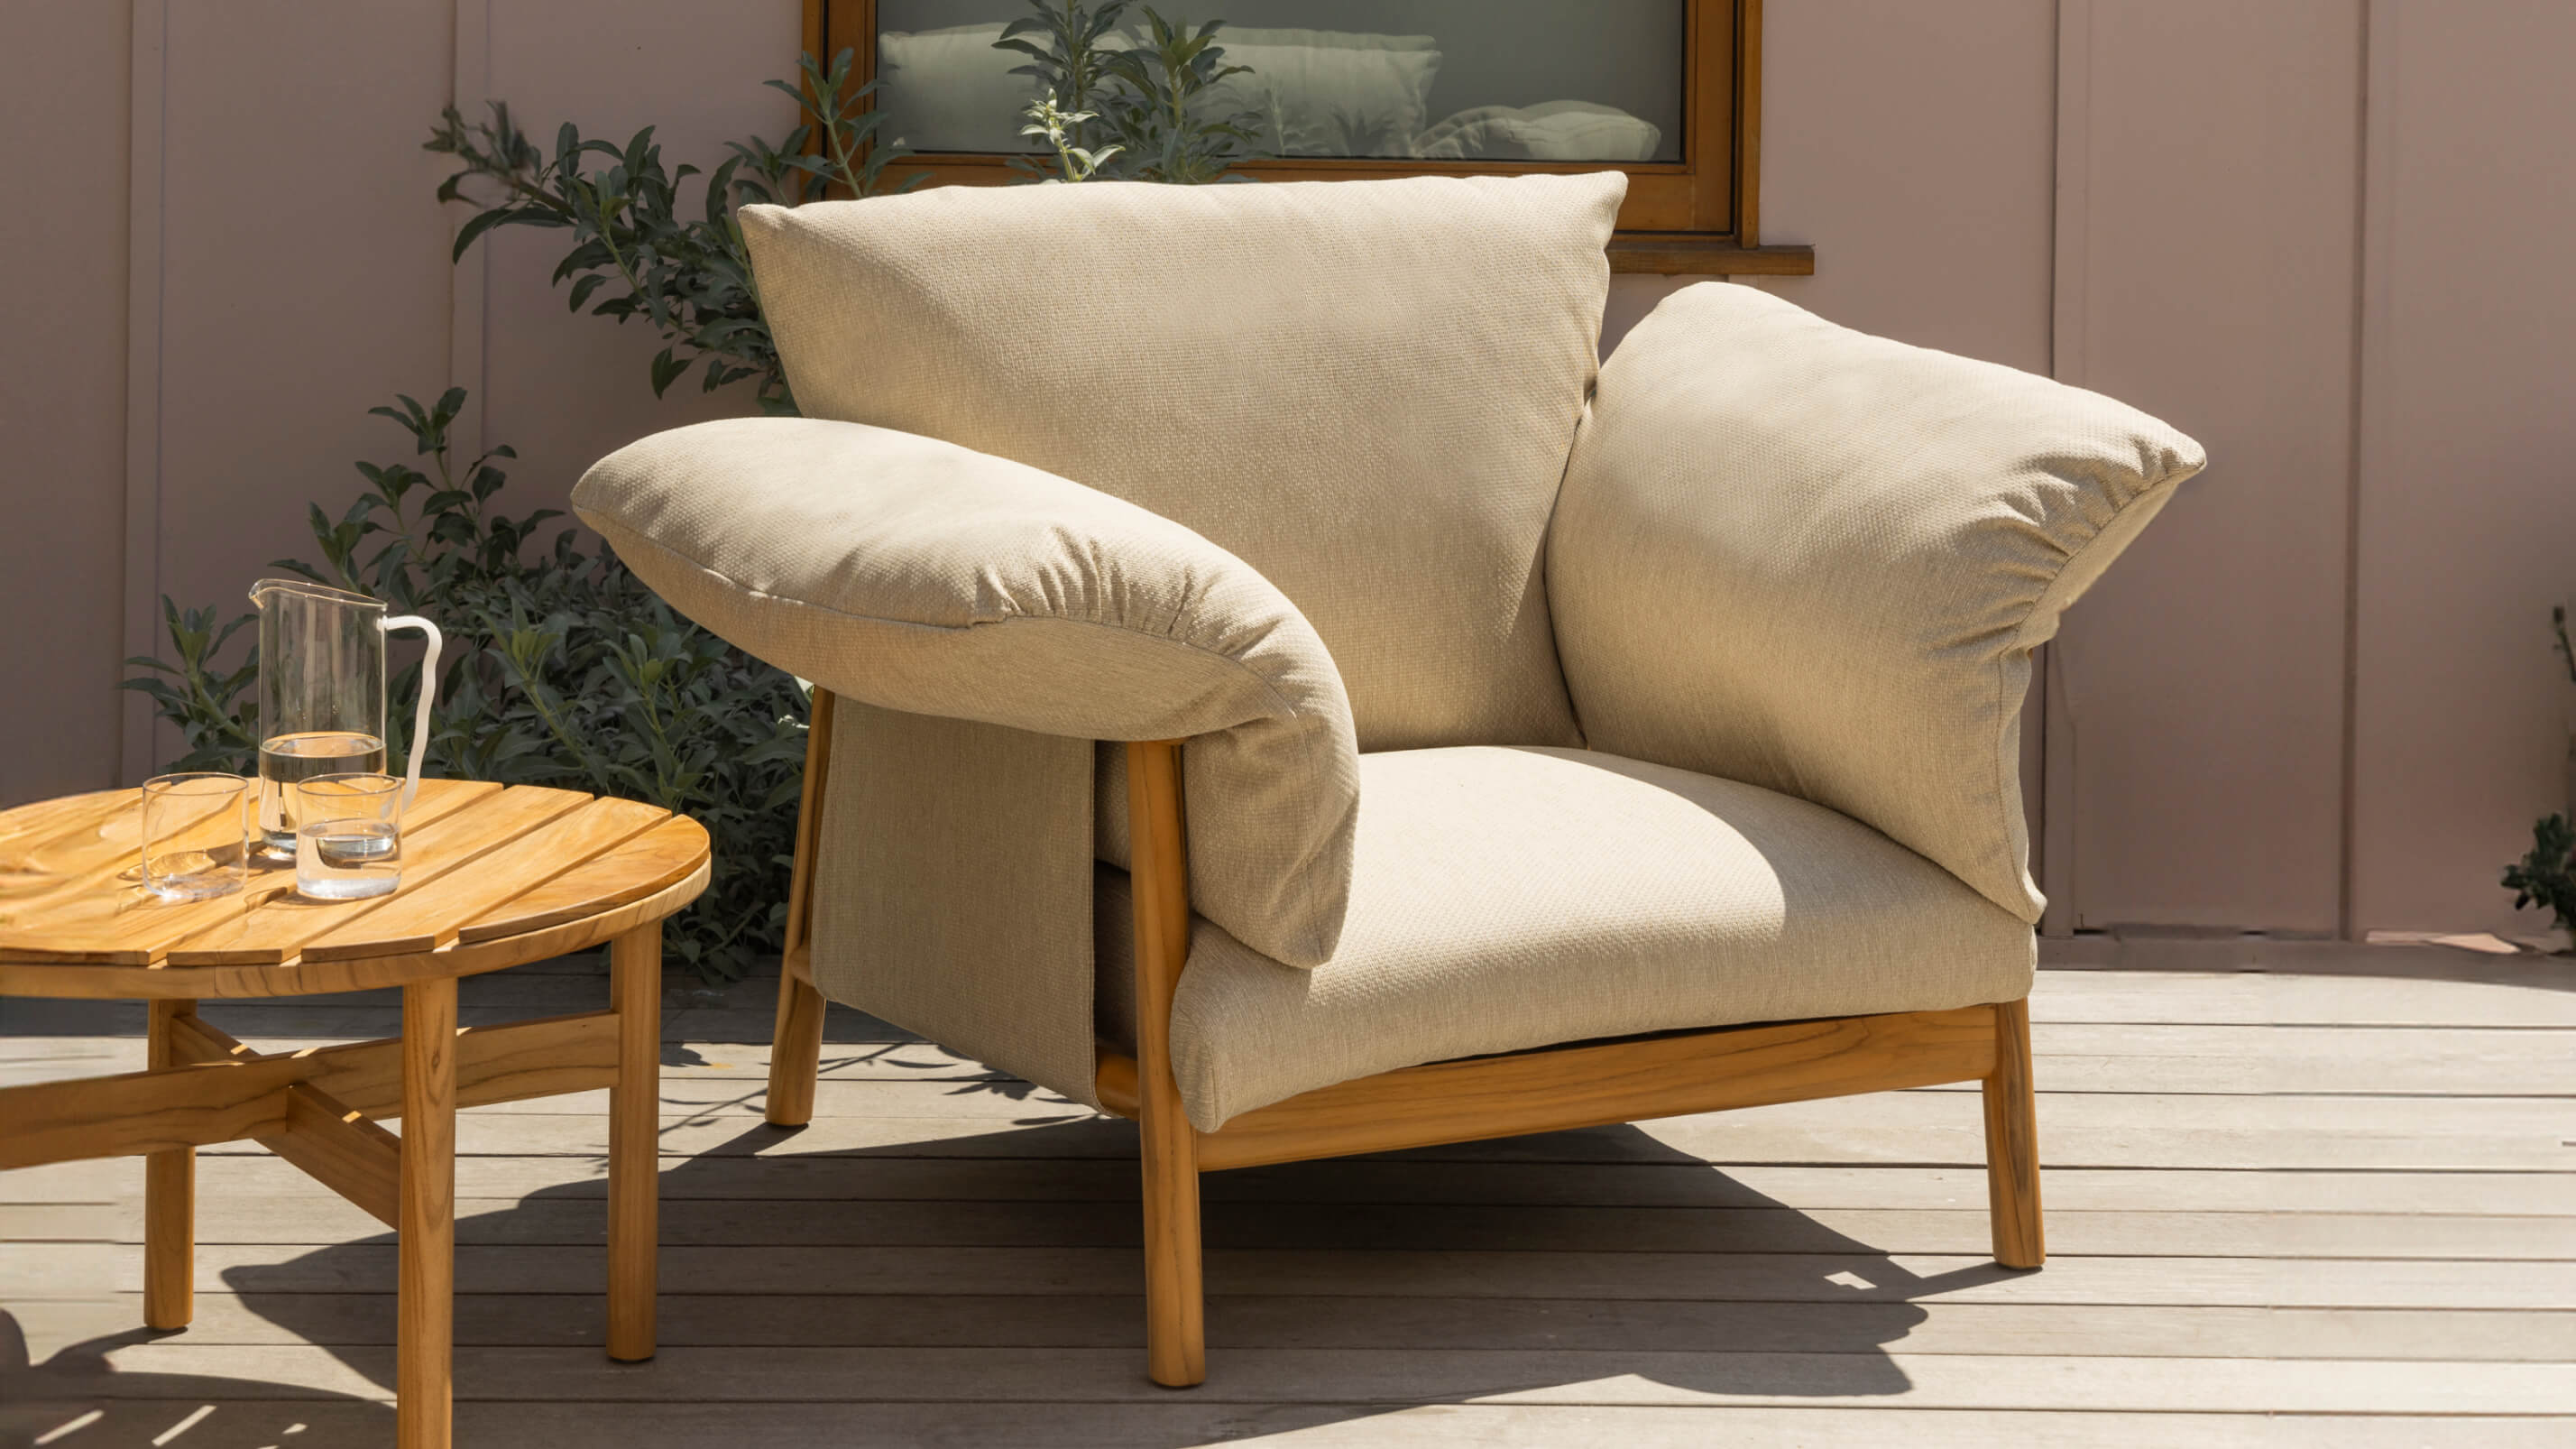 Pillow Talk Outdoor Lounge Chair, Pepper - Image 5